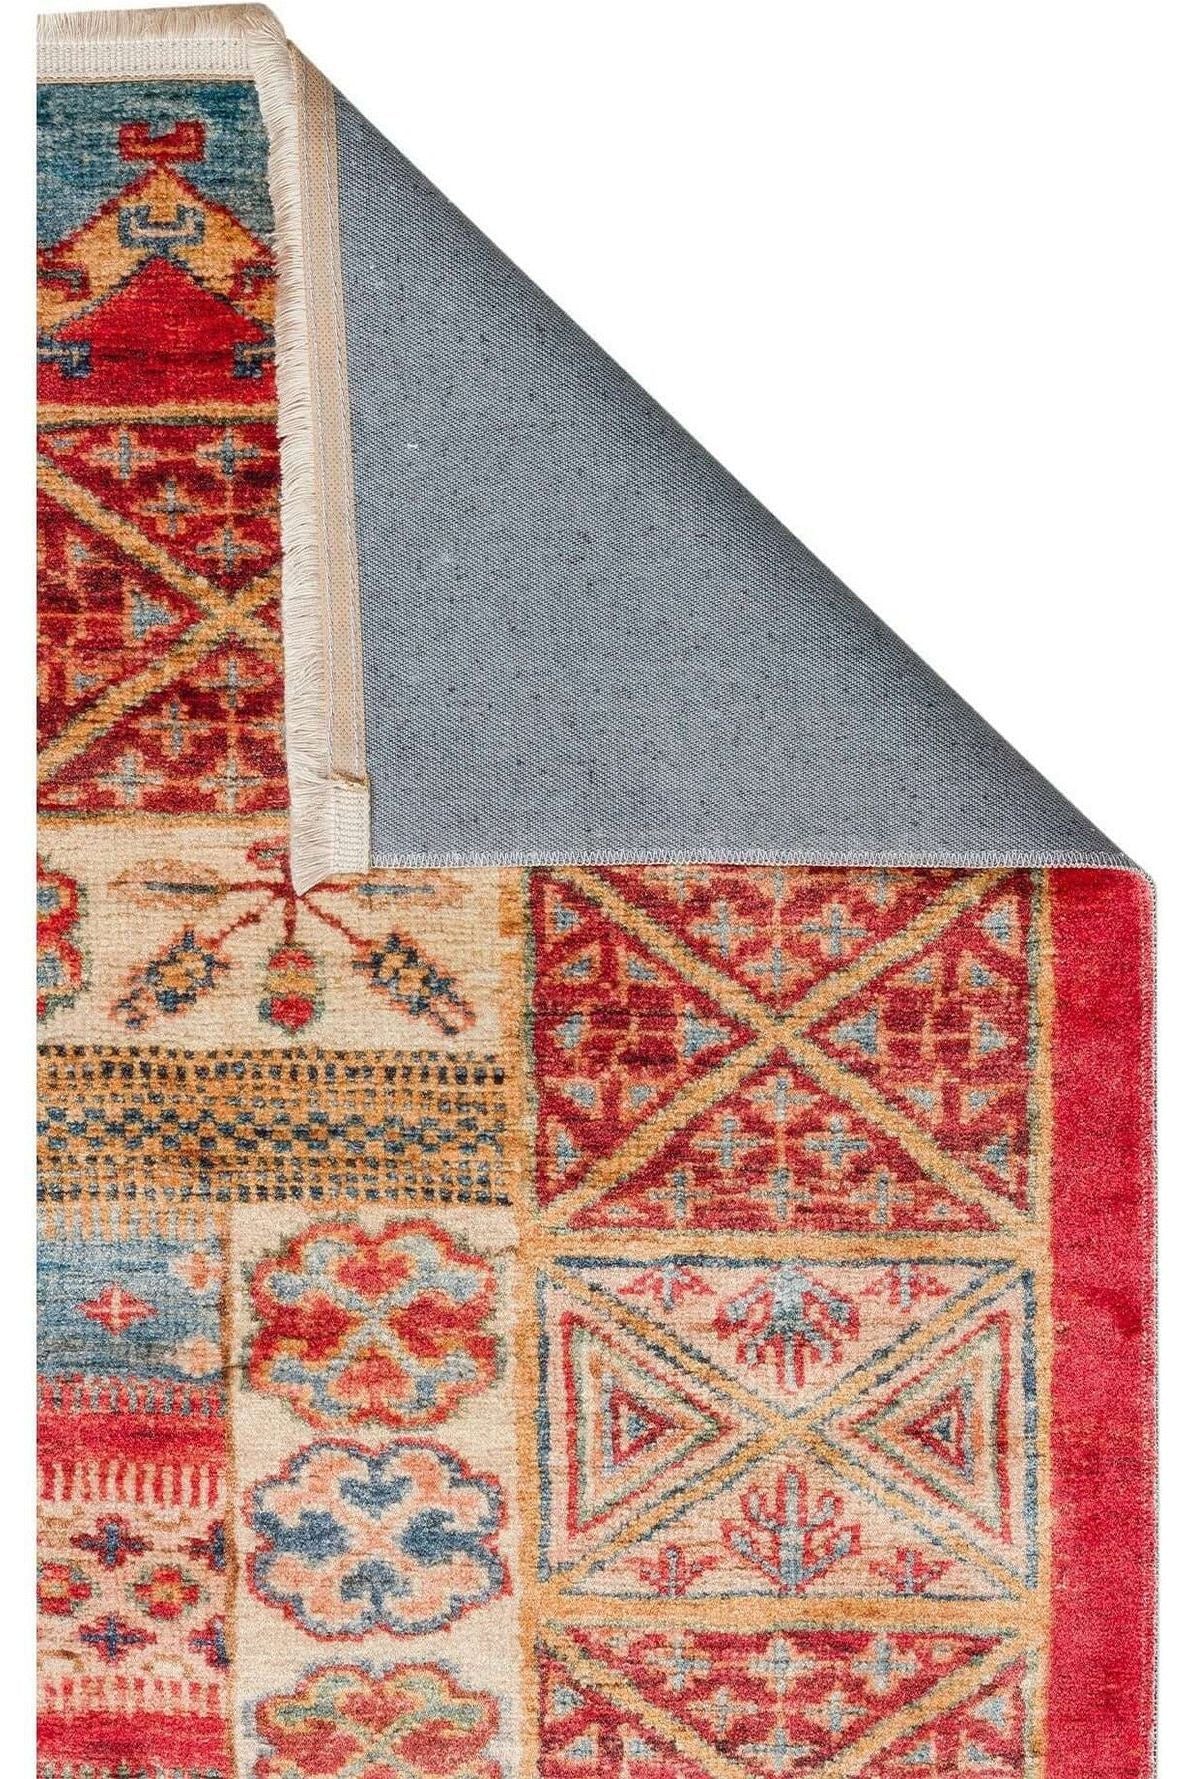 #Turkish_Carpets_Rugs# #Modern_Carpets# #Abrash_Carpets#Atk 04 Multy